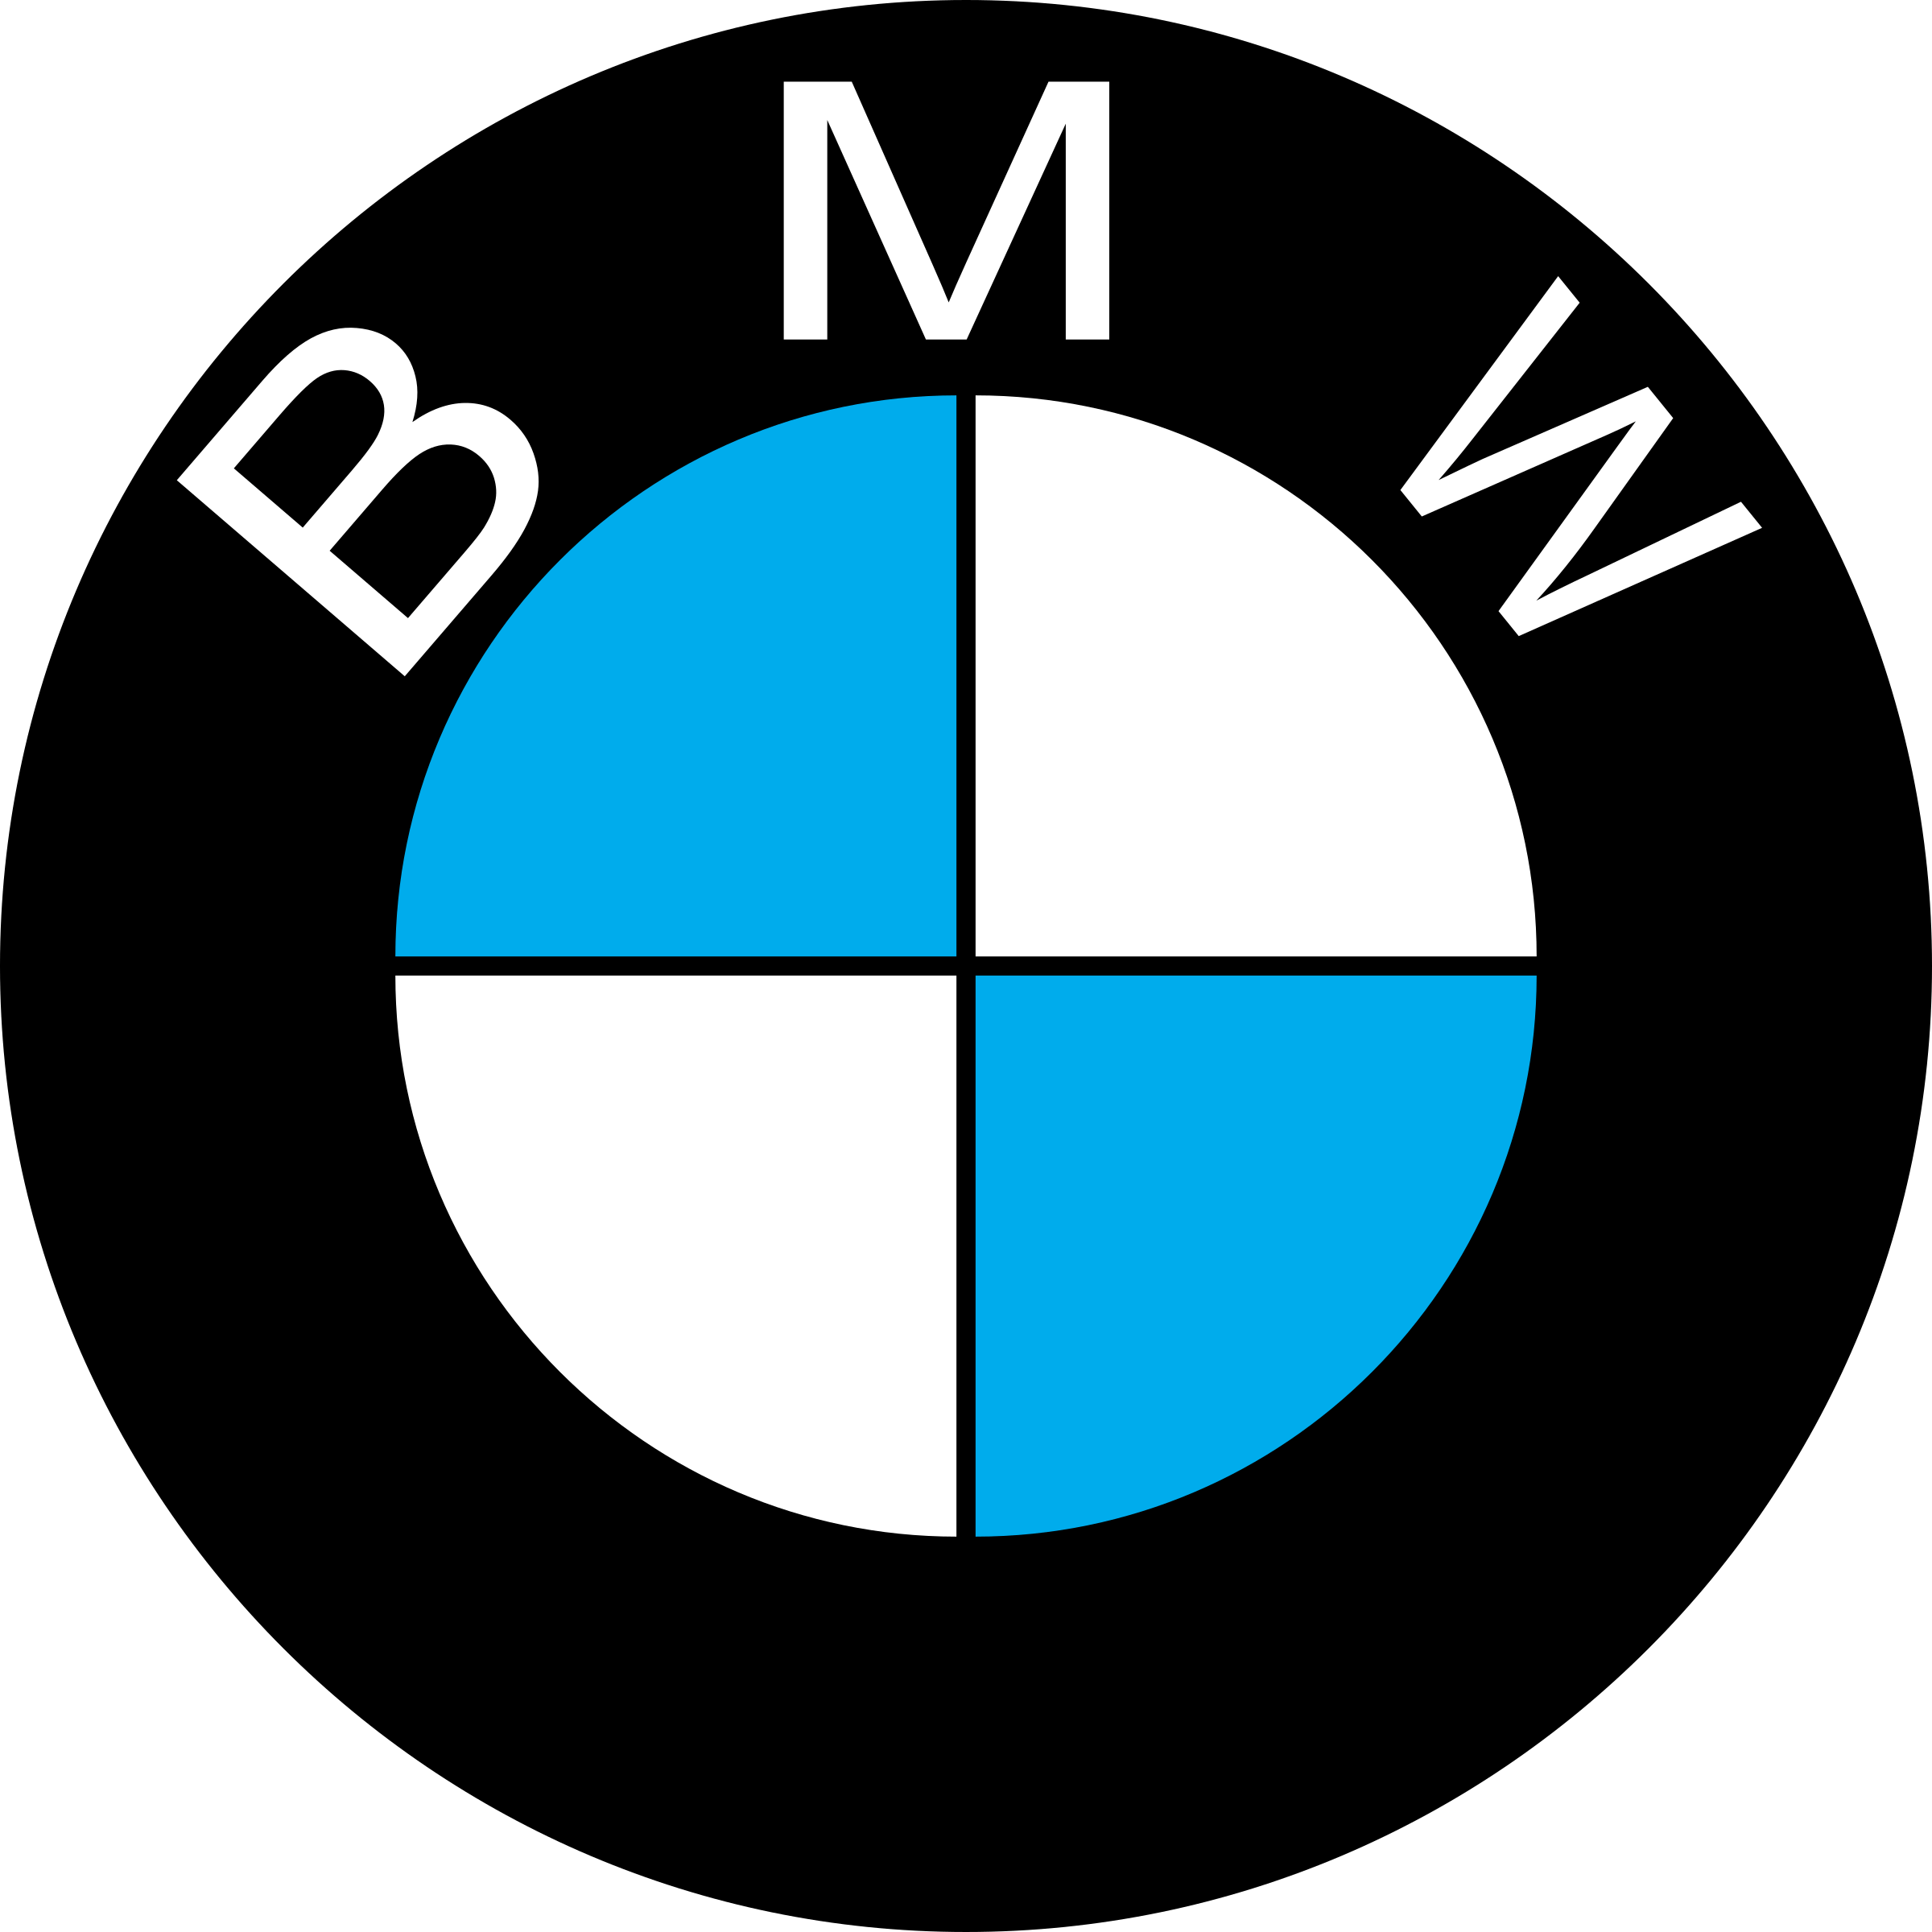 BWM Logo - BMW Logo PNG Transparent & SVG Vector - Freebie Supply